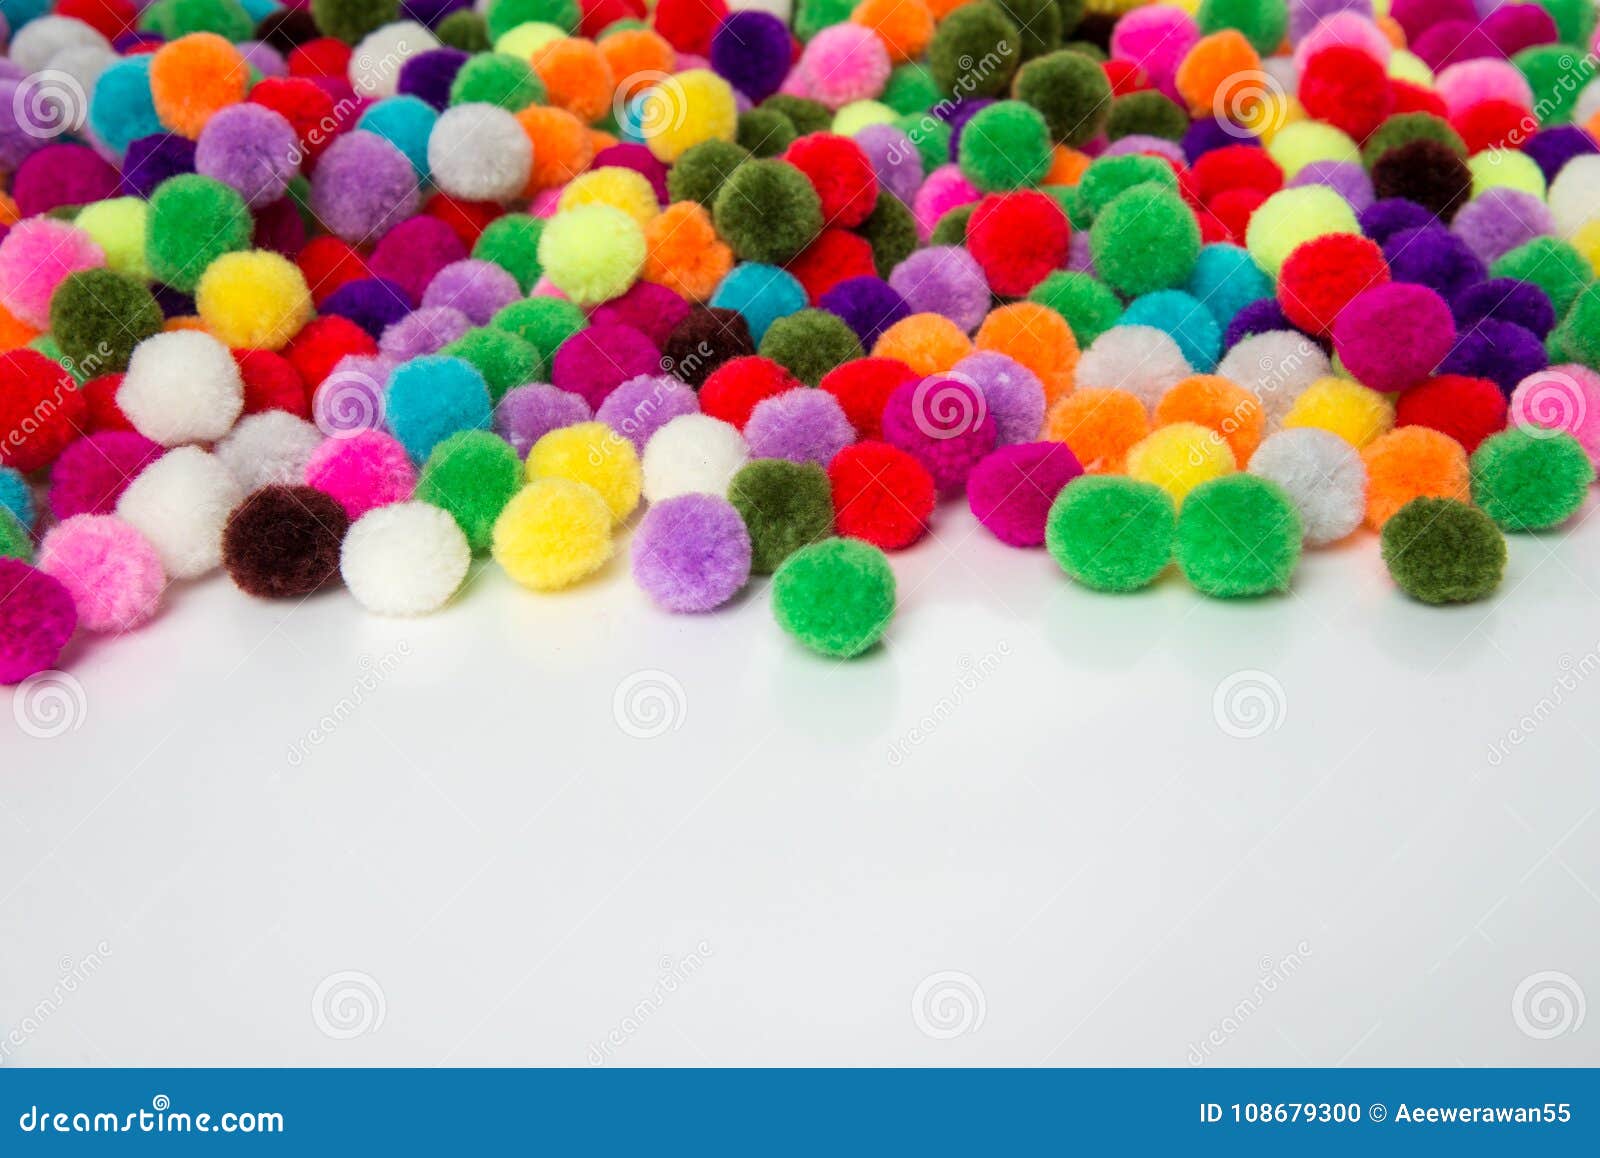 A Colorful Pom Pom Onwhite Background, Stock Photo - Image accessories: 108679300